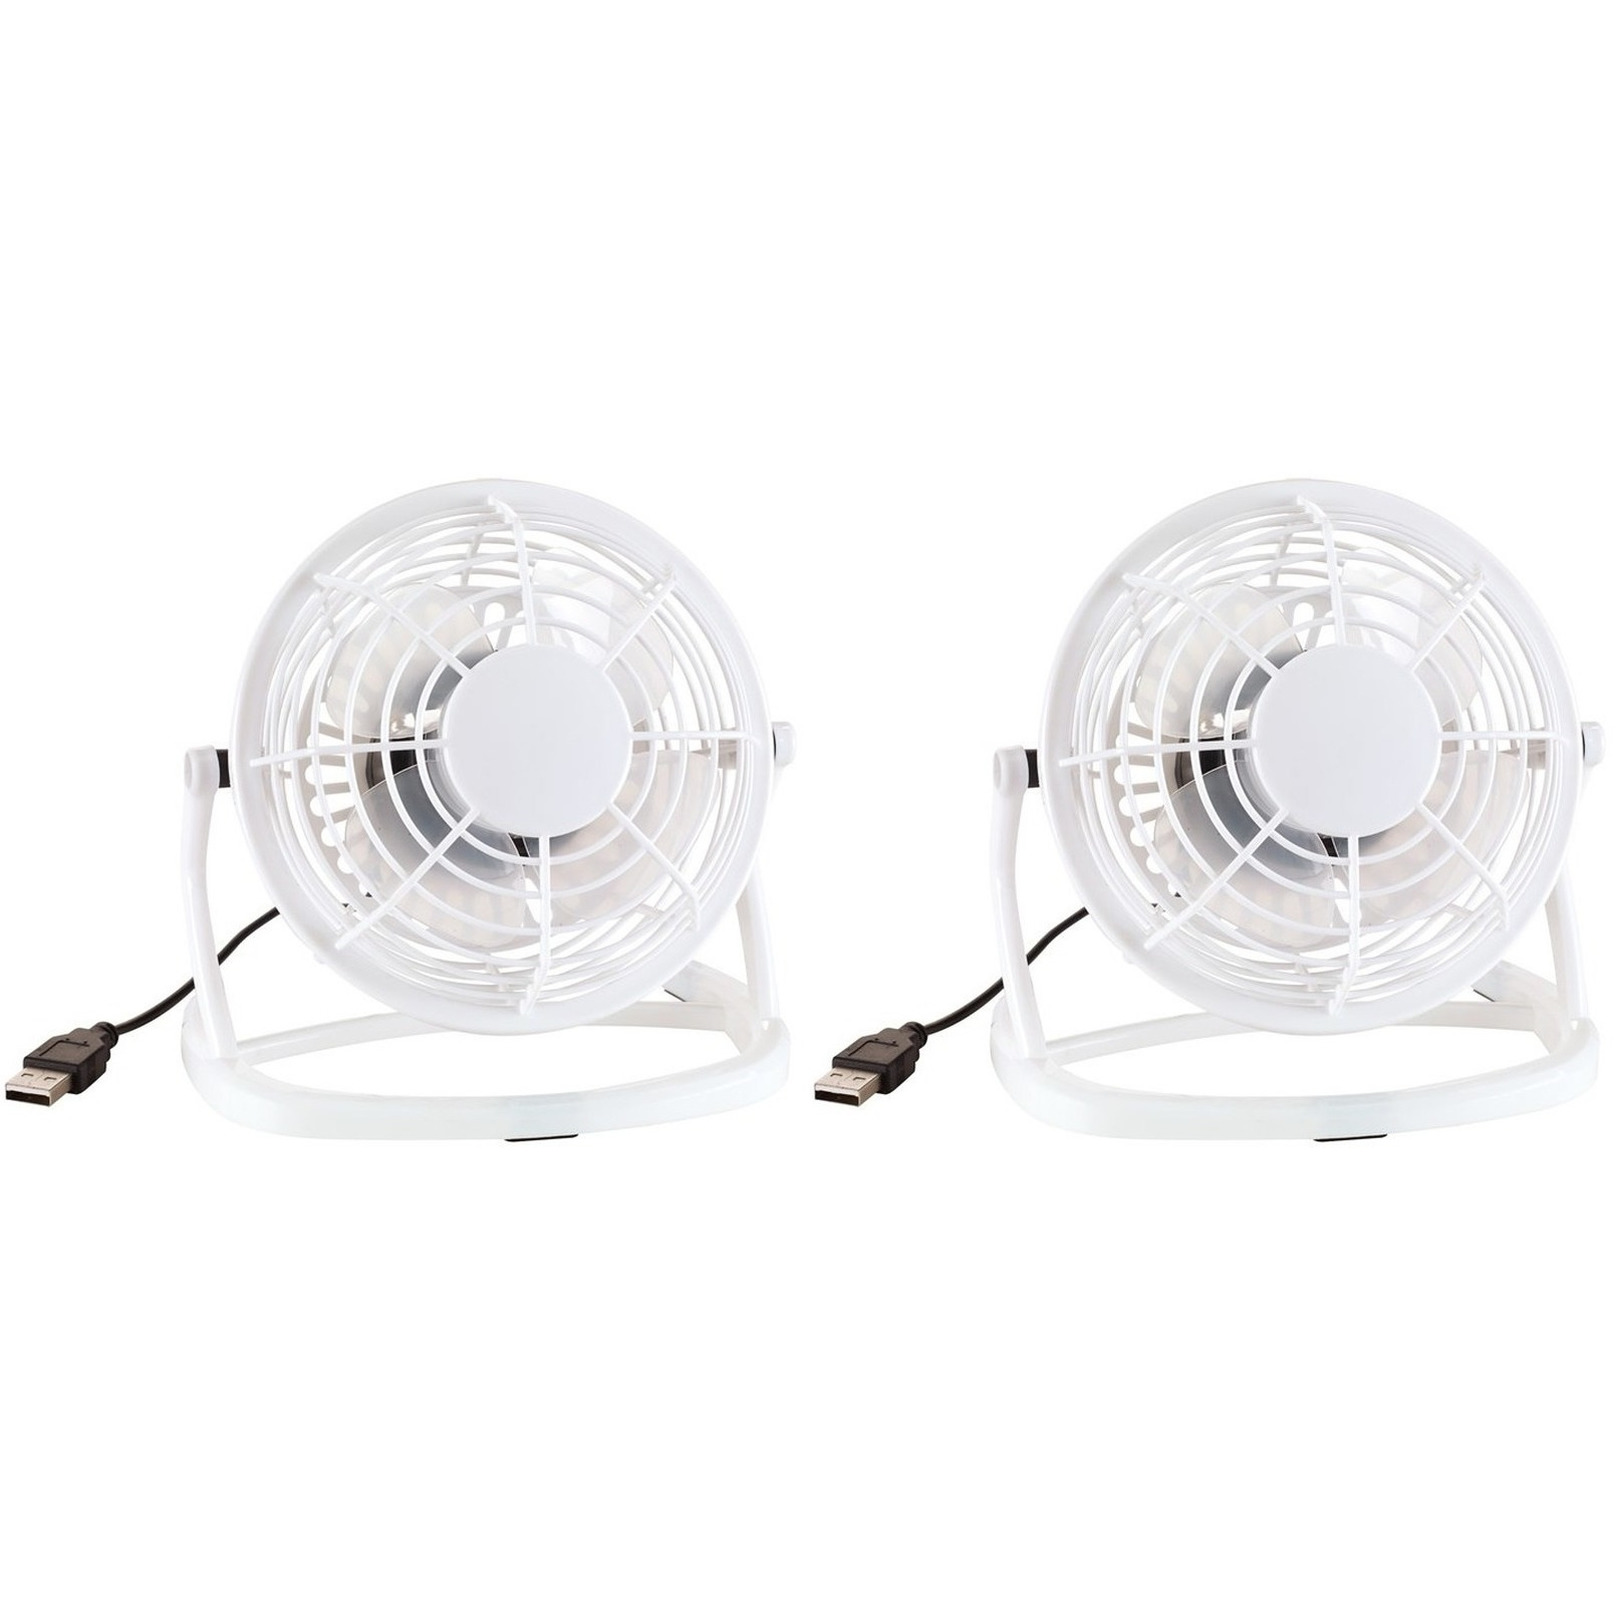 Set van 2x stuks mini ventilator wit 14 cm - USB aansluiting - Tafelventilator - Bureau ventilator